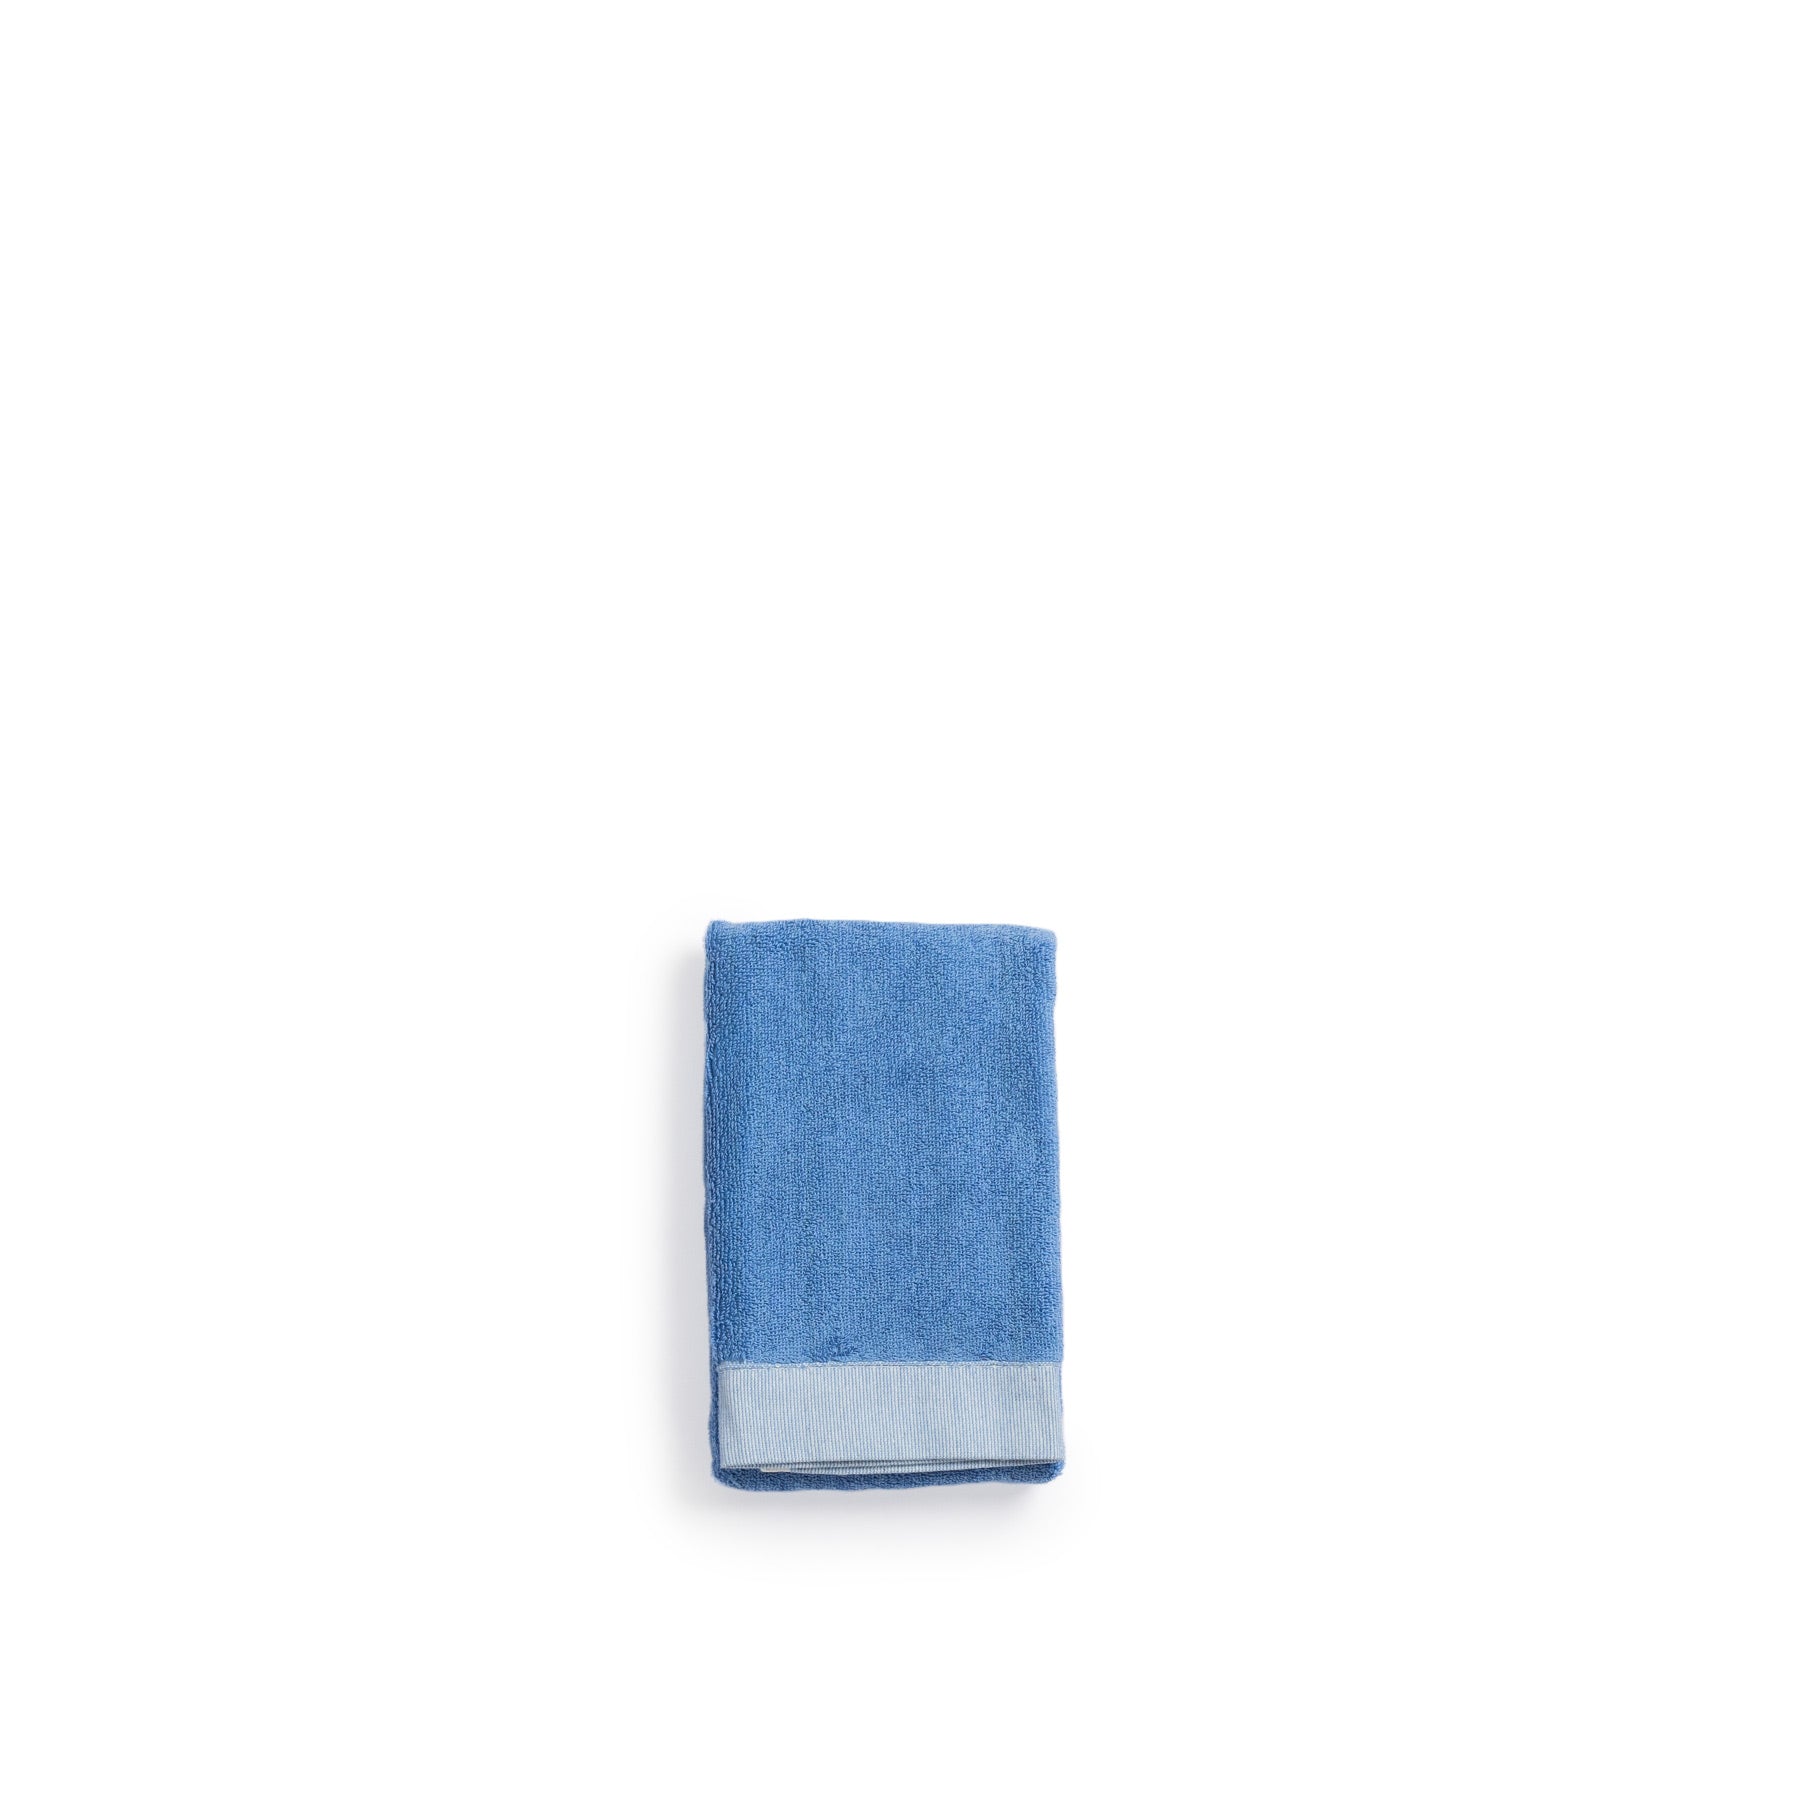 Hand Towel in Indigo Zoom Image 1